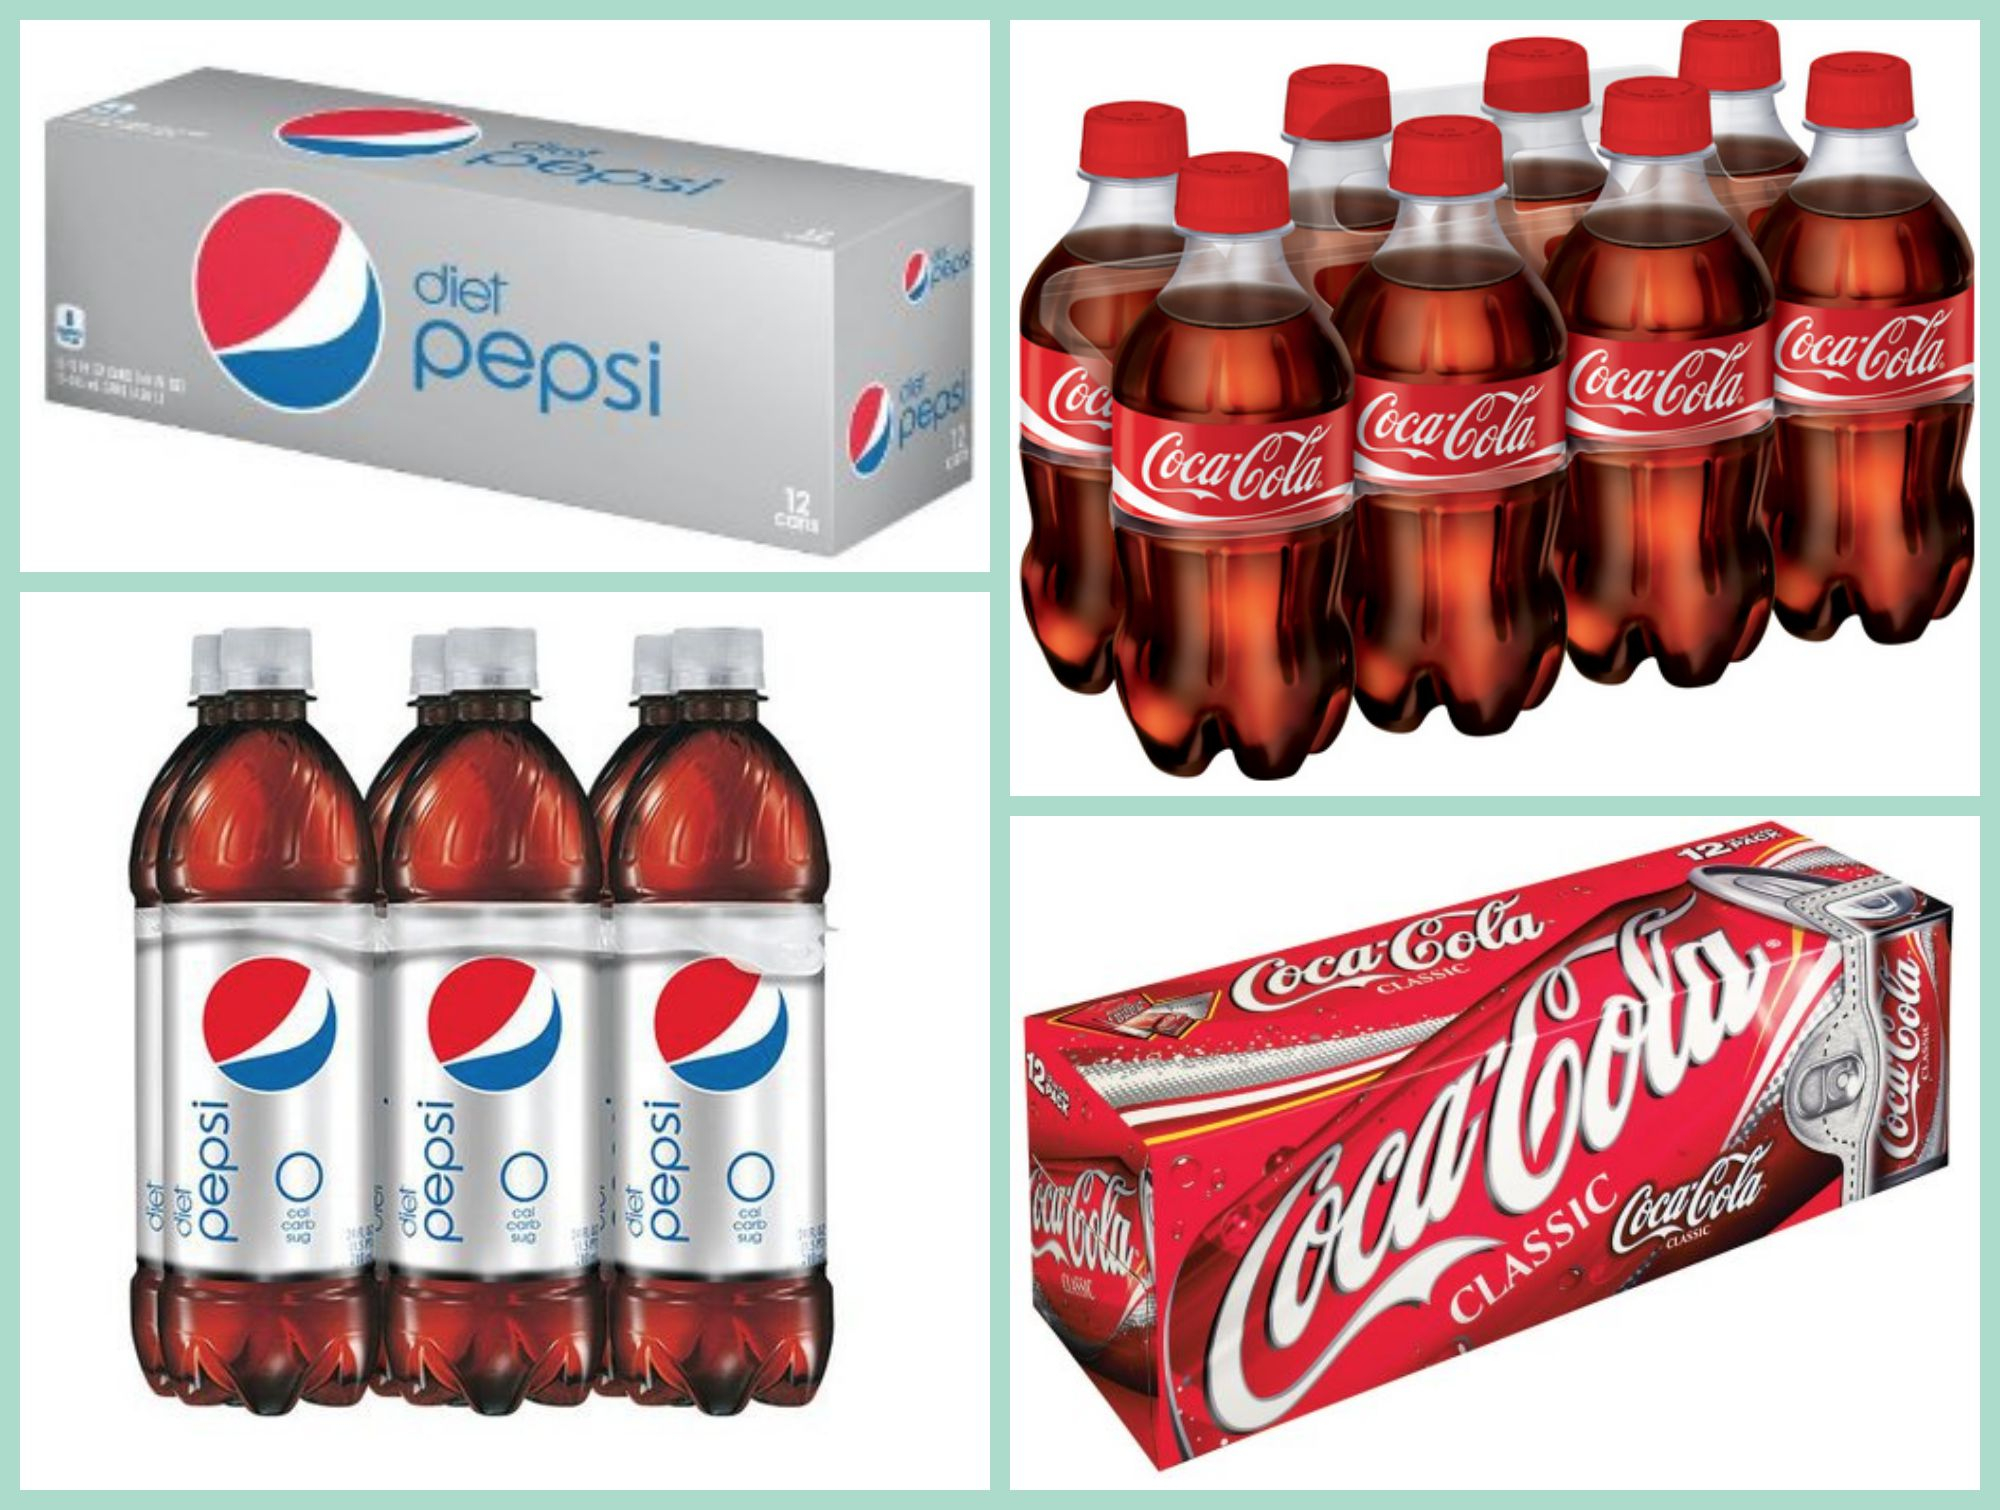 Target Coca Cola And Diet Pepsi Deals Passionate Penny 